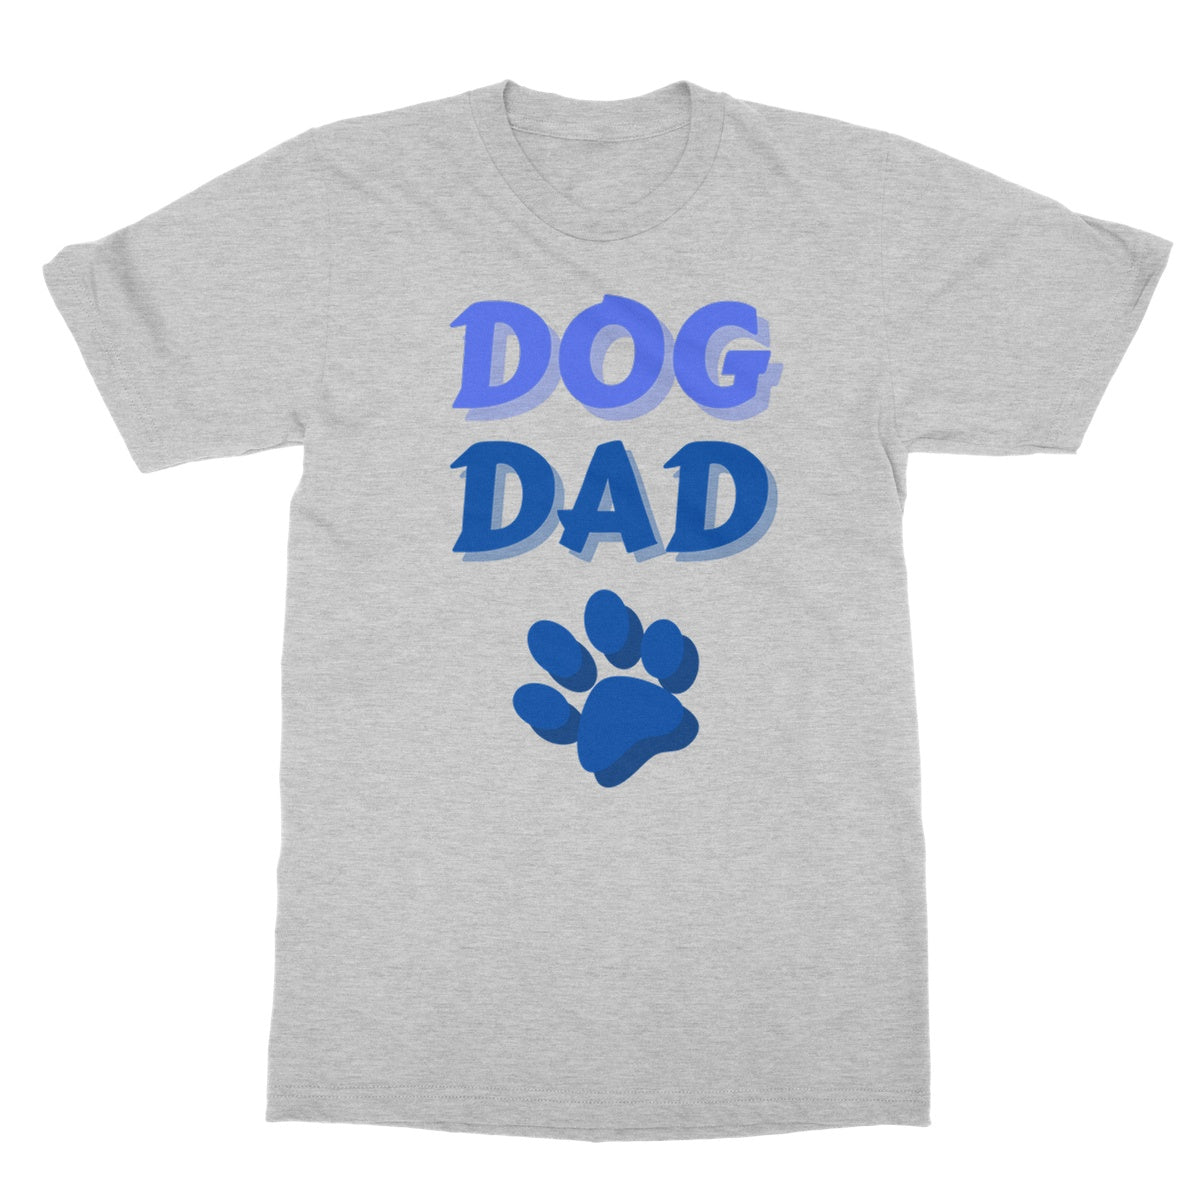 dog dad t shirt grey